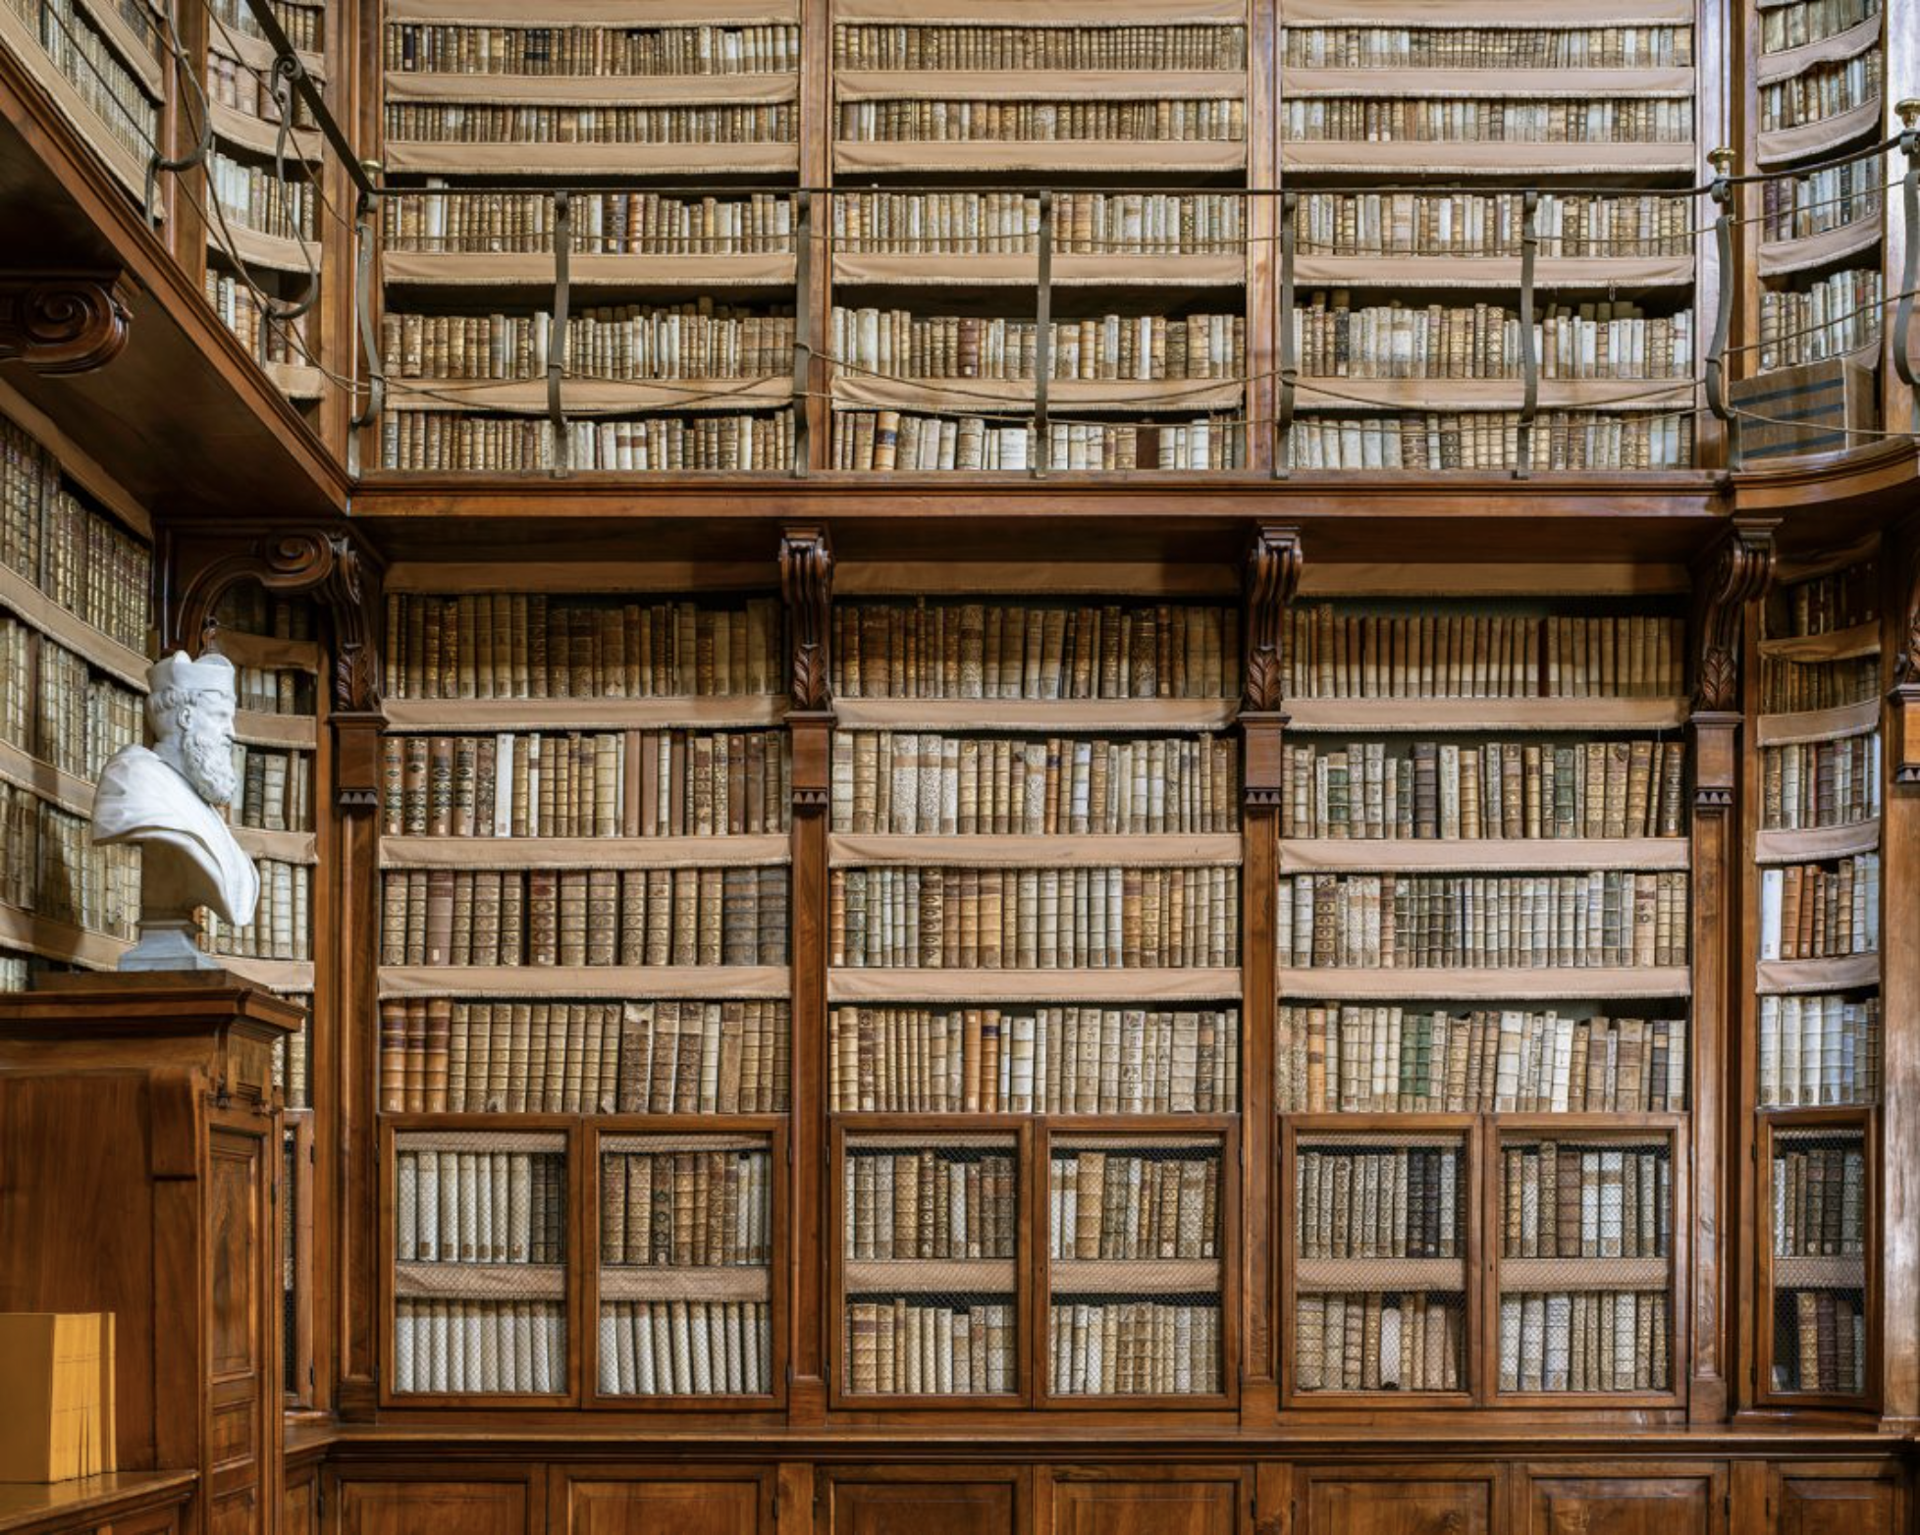 Biblioteca Angelica, Rome, Italy by Reinhard Gorner